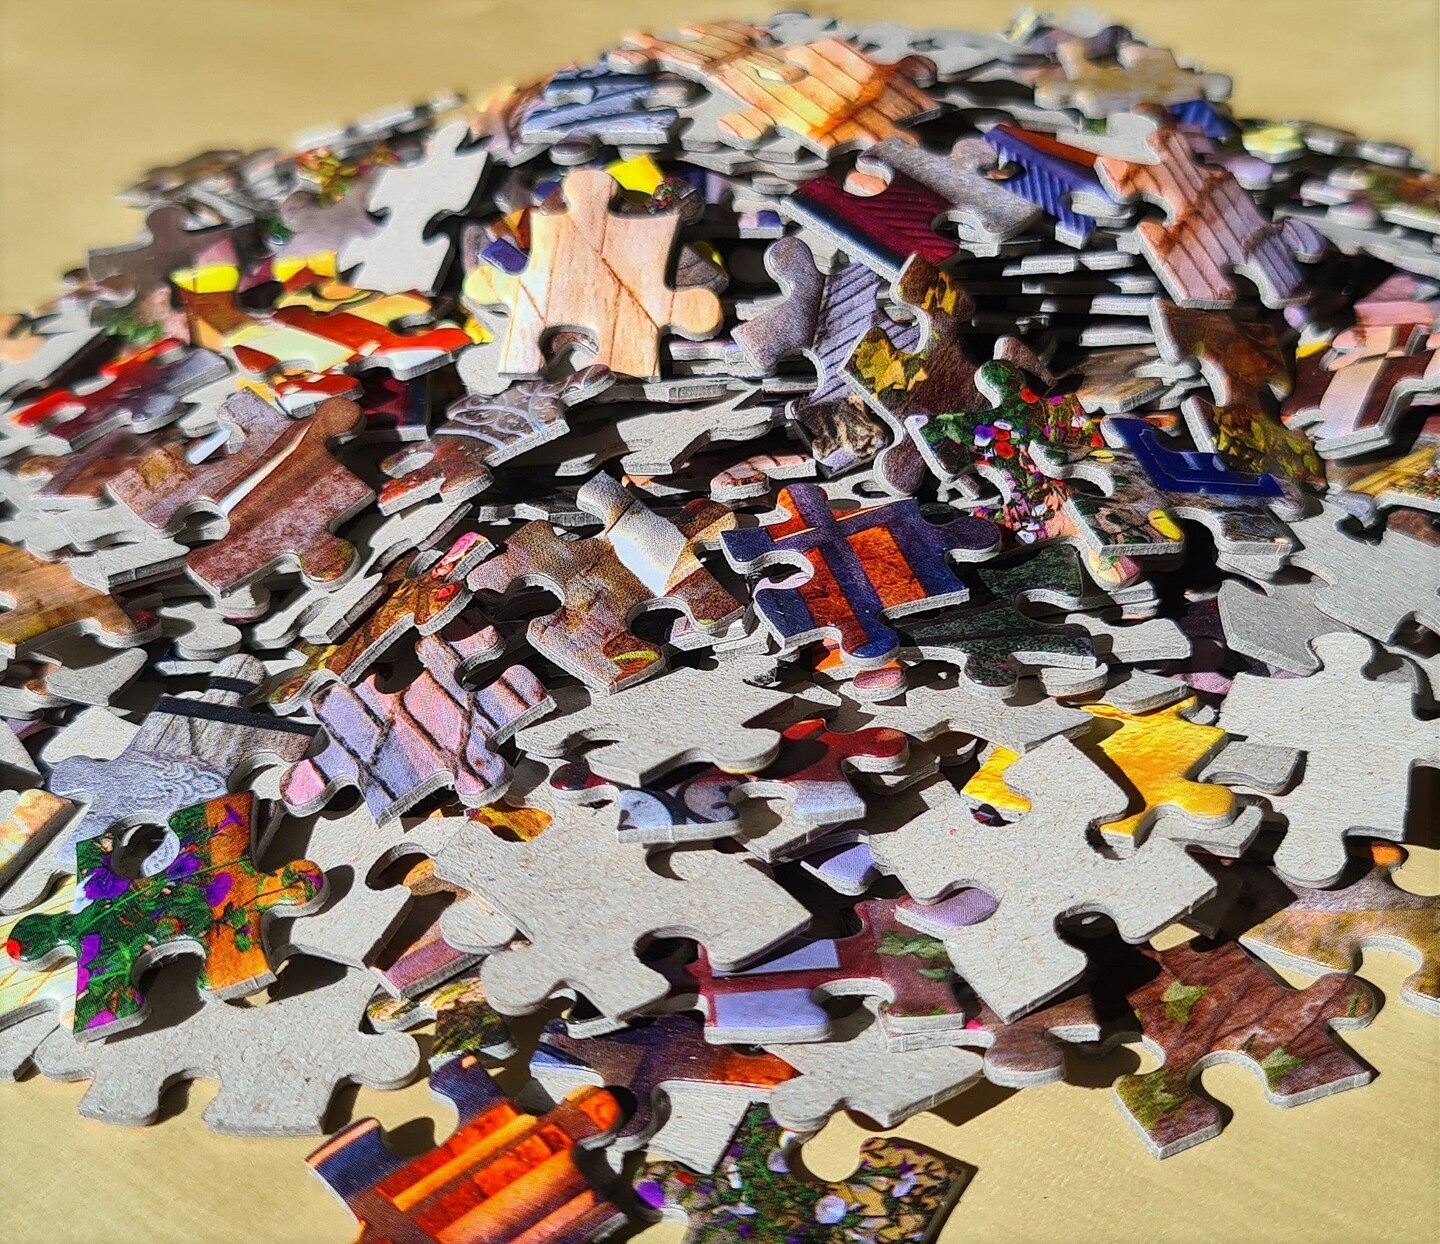 1000 Piece Jigsaw Puzzle, Marine to Life, Adult Puzzle, Castorland C-104581-2